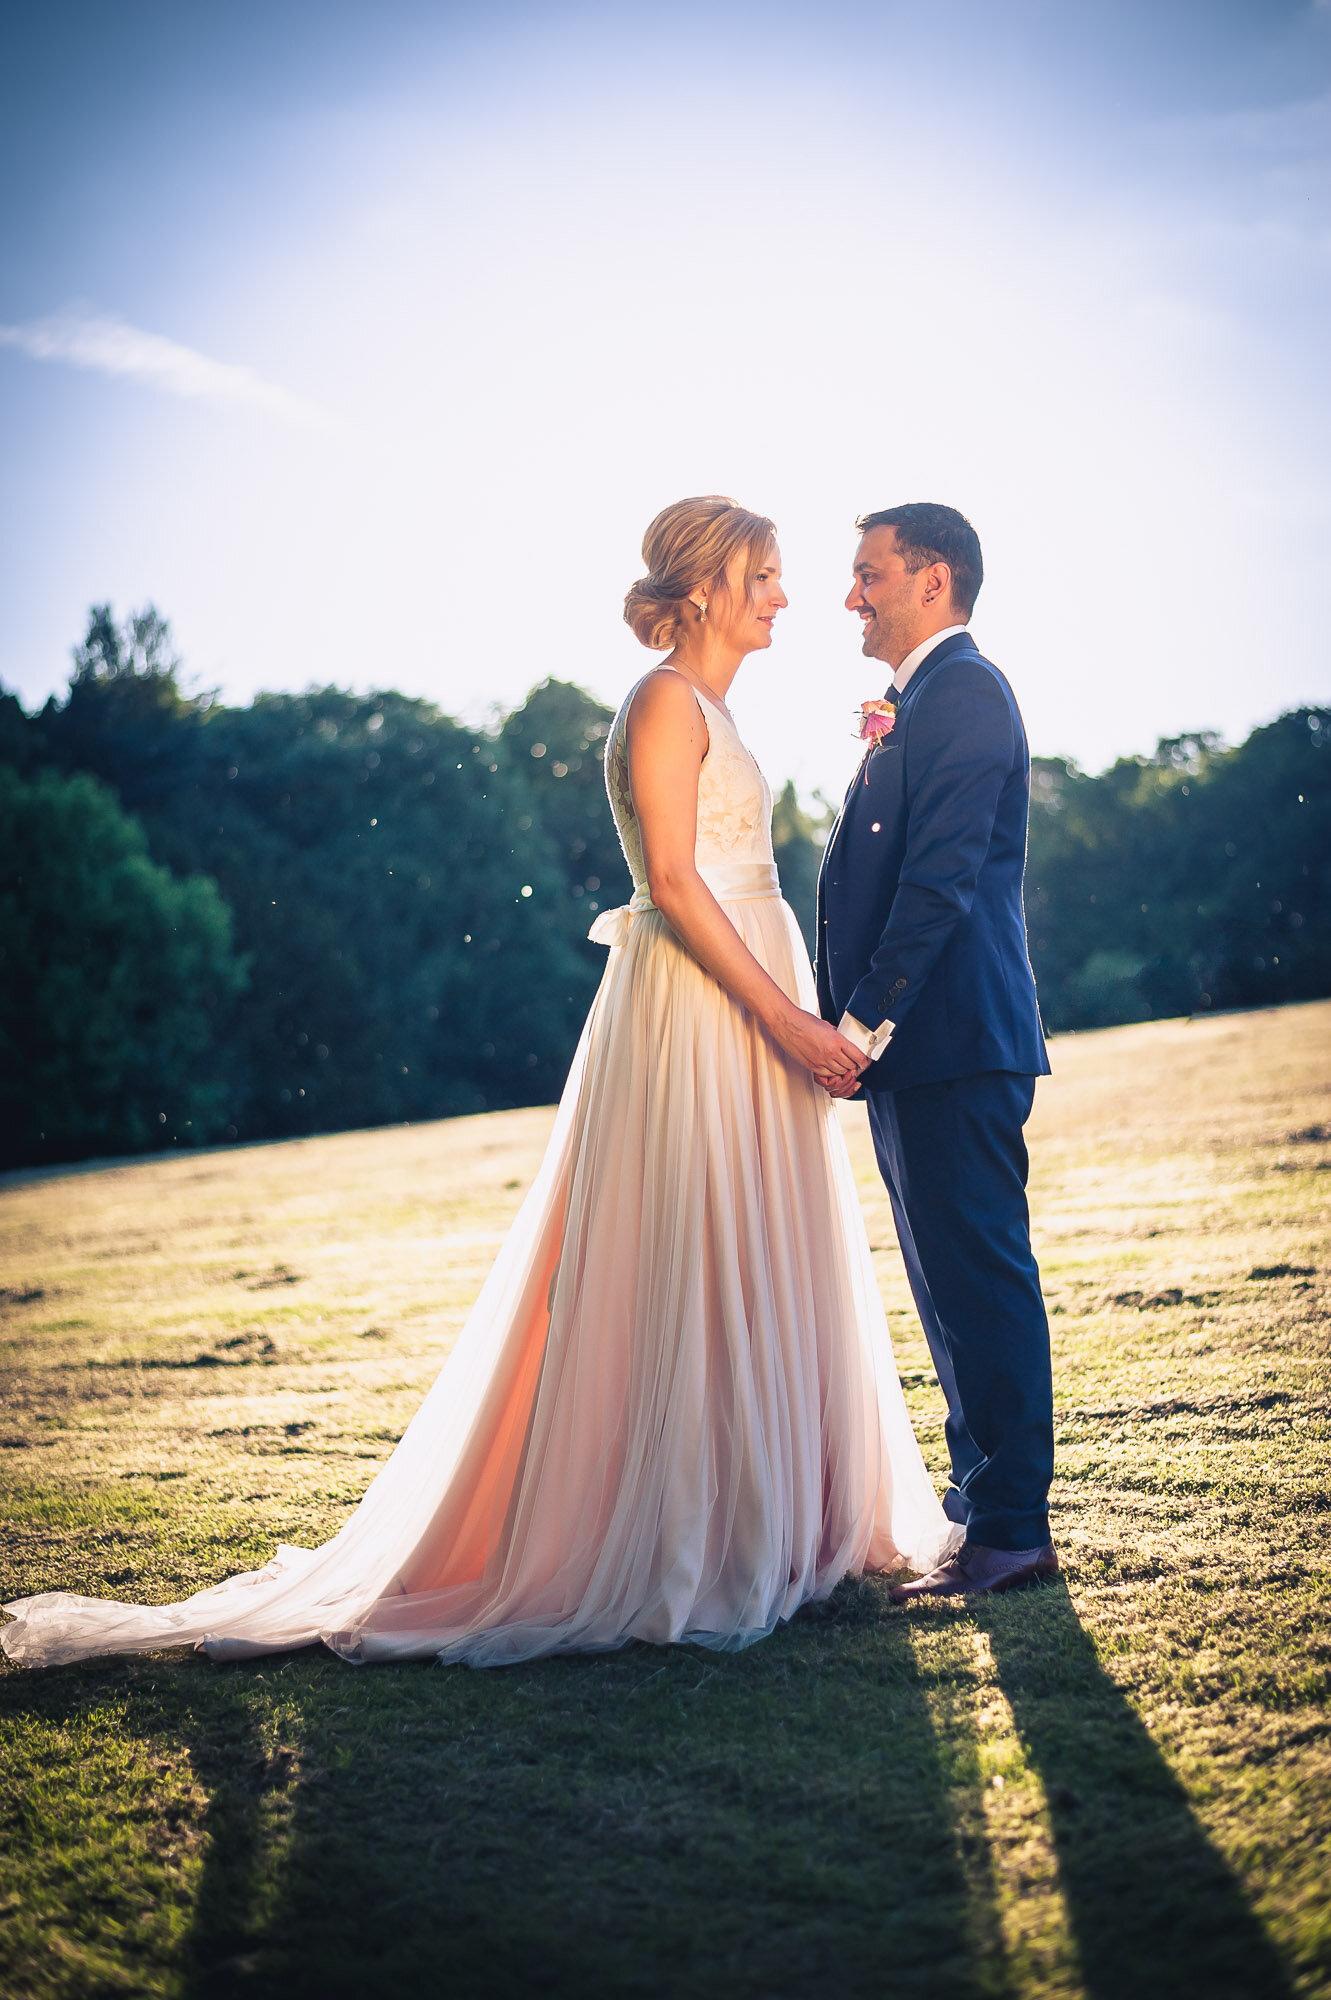 wedding-photography-country-tipis-hertford-hertfordshire-pike-photography-2020-27.jpg